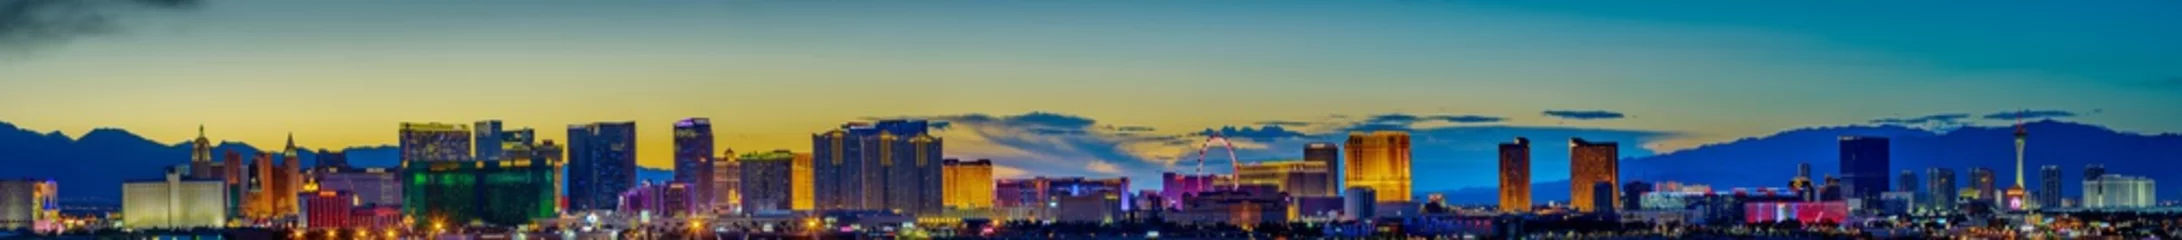 Möbelaufkleber Skyline-Blick bei Sonnenuntergang des berühmten Las Vegas Strip in Weltklasse-Hotels und Casinos, NV © yooranpark